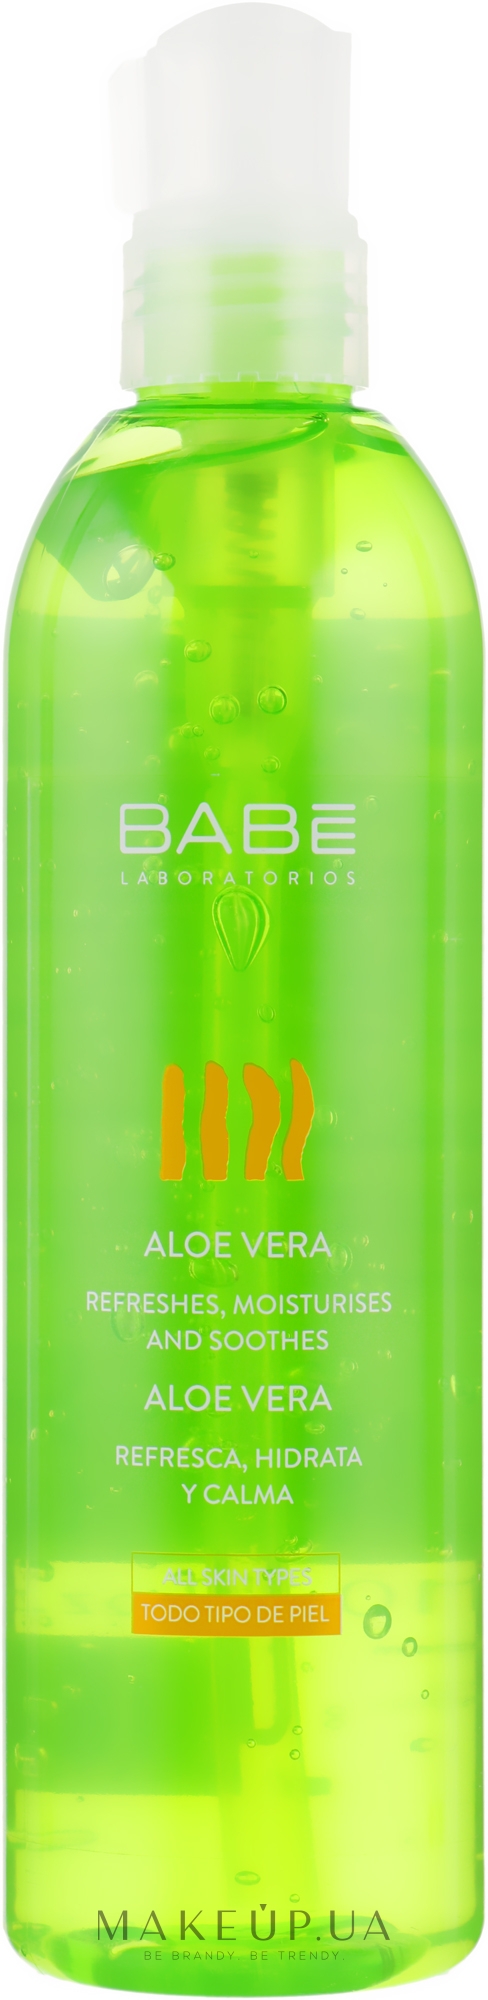 Увлажняющий успокаивающий гель со 100% алоэ вера - Babe Laboratorios Aloe Gel — фото 300ml